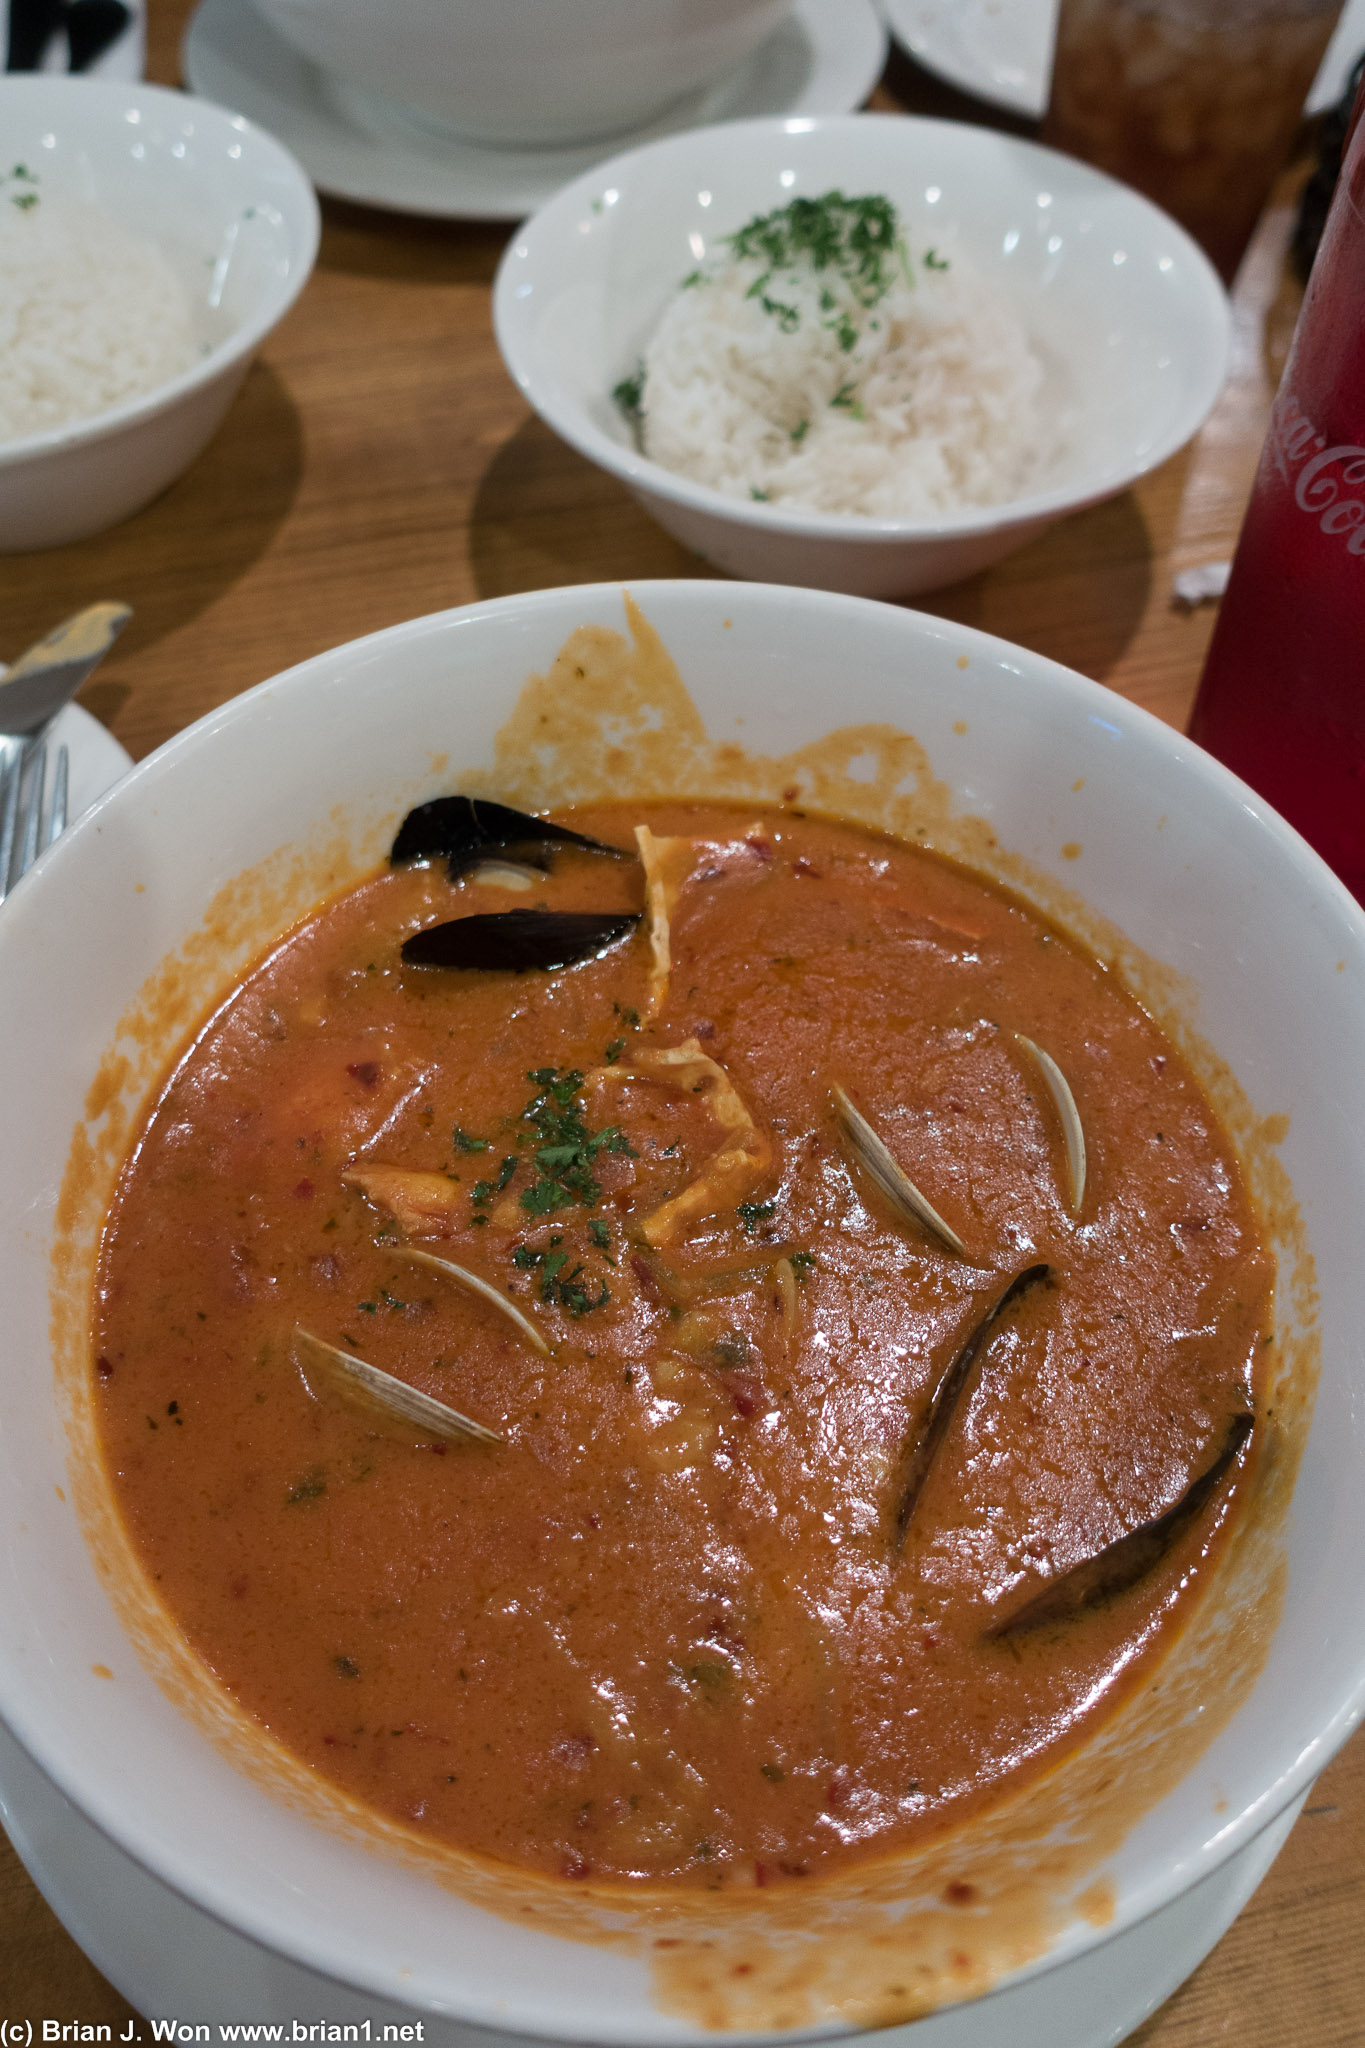 Bouillaroast, aka seafood stew. I wasn't impressed.